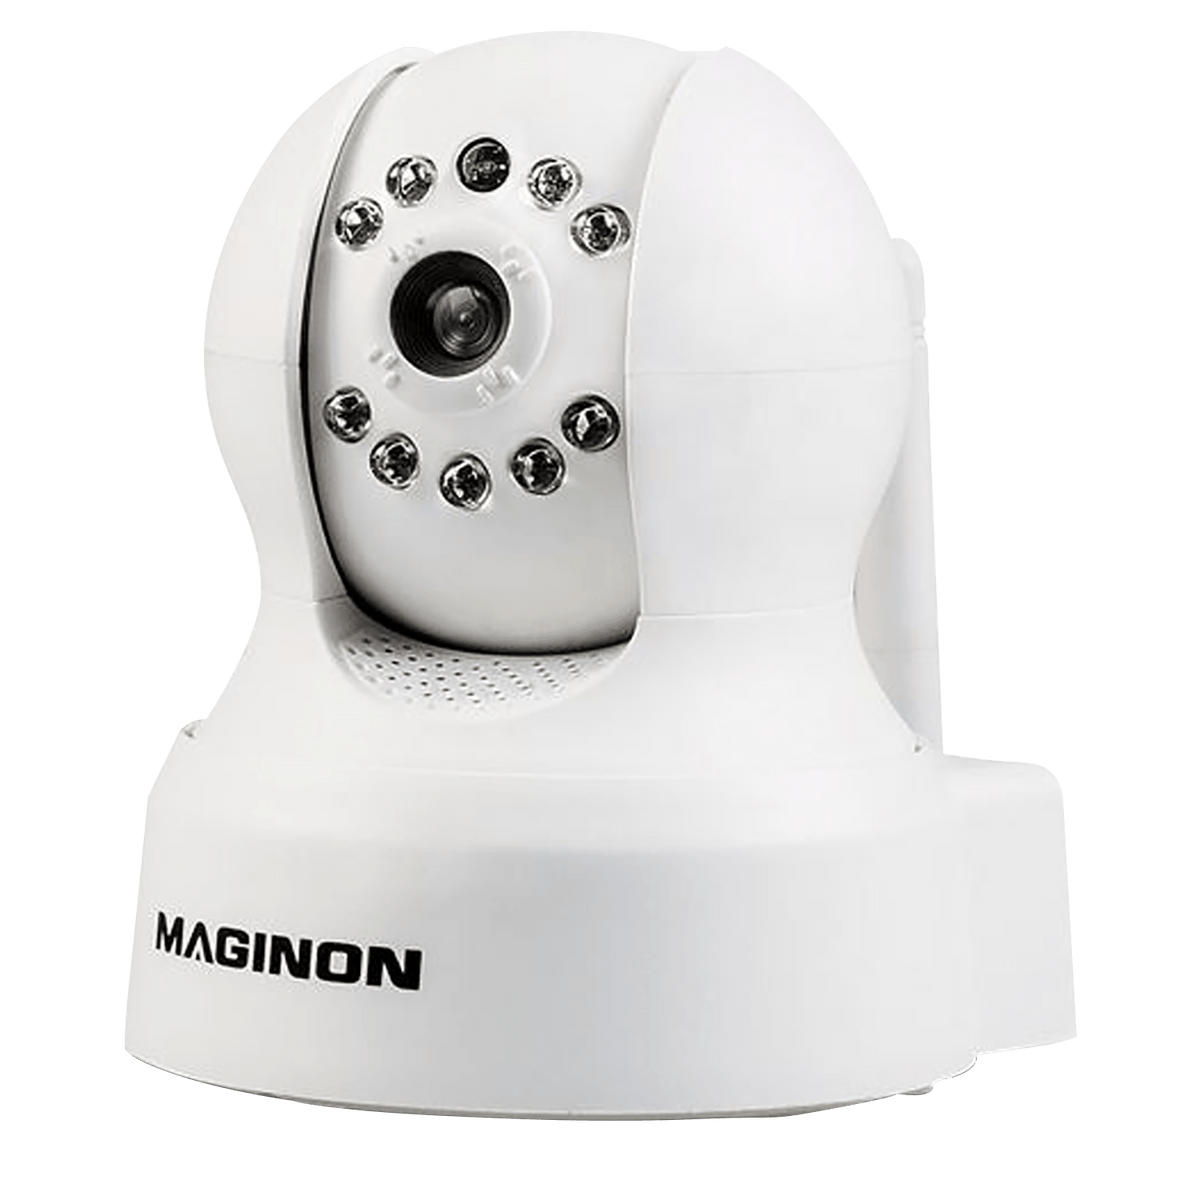 maginon wireless security camera ipc-1a software